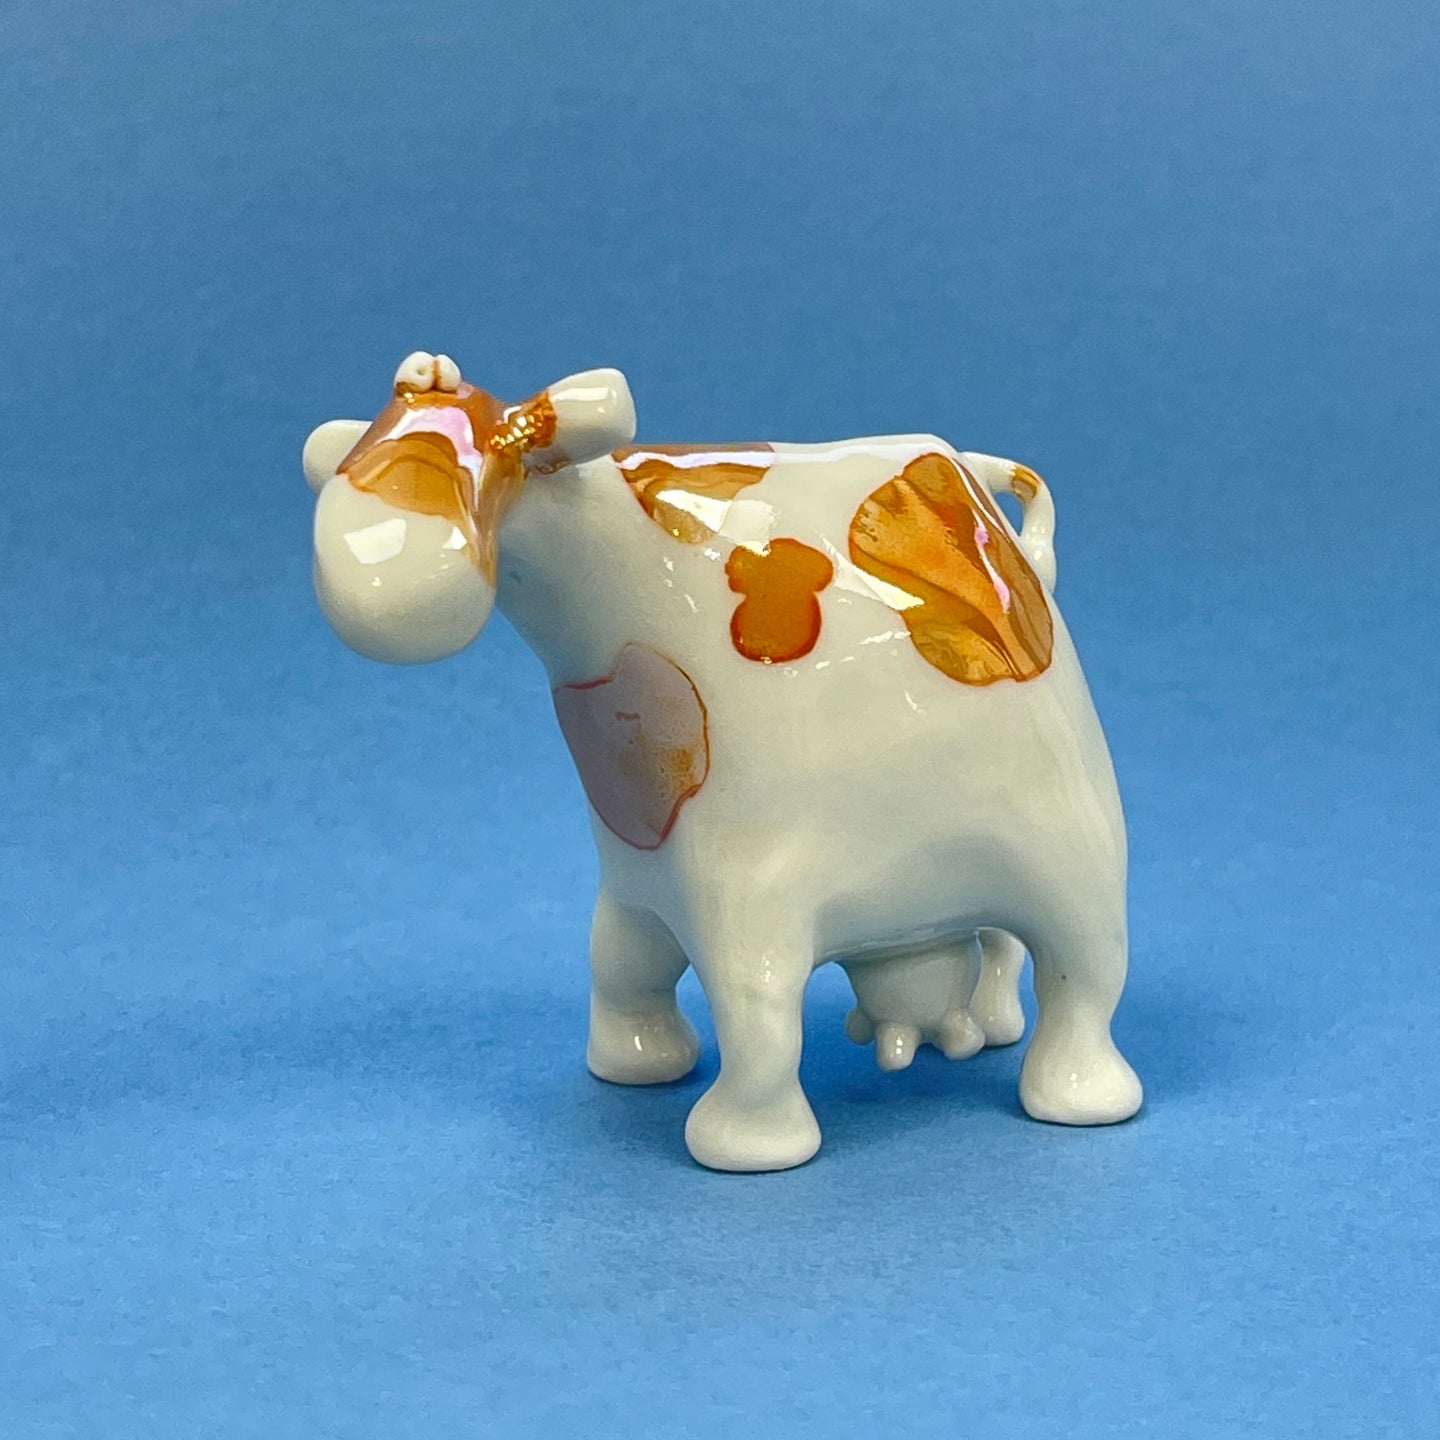 Ceramic sculpture - cow small brown